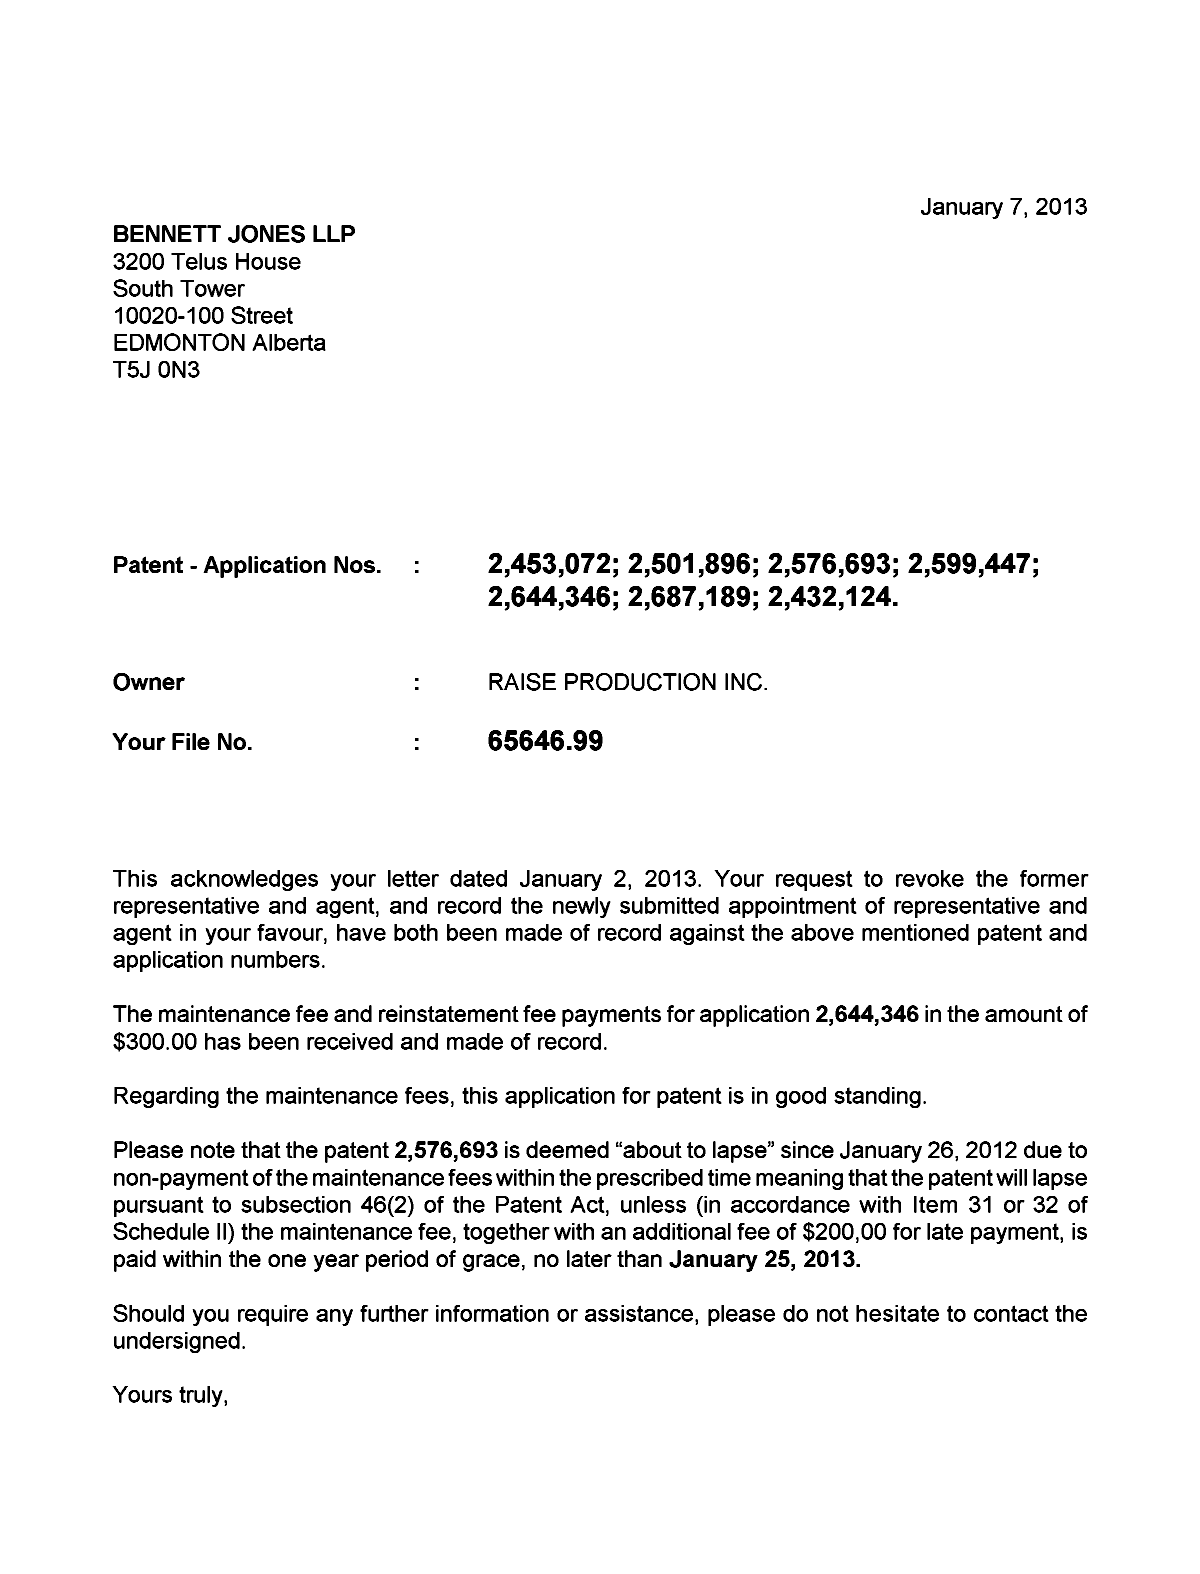 Canadian Patent Document 2432124. Correspondence 20130107. Image 1 of 2